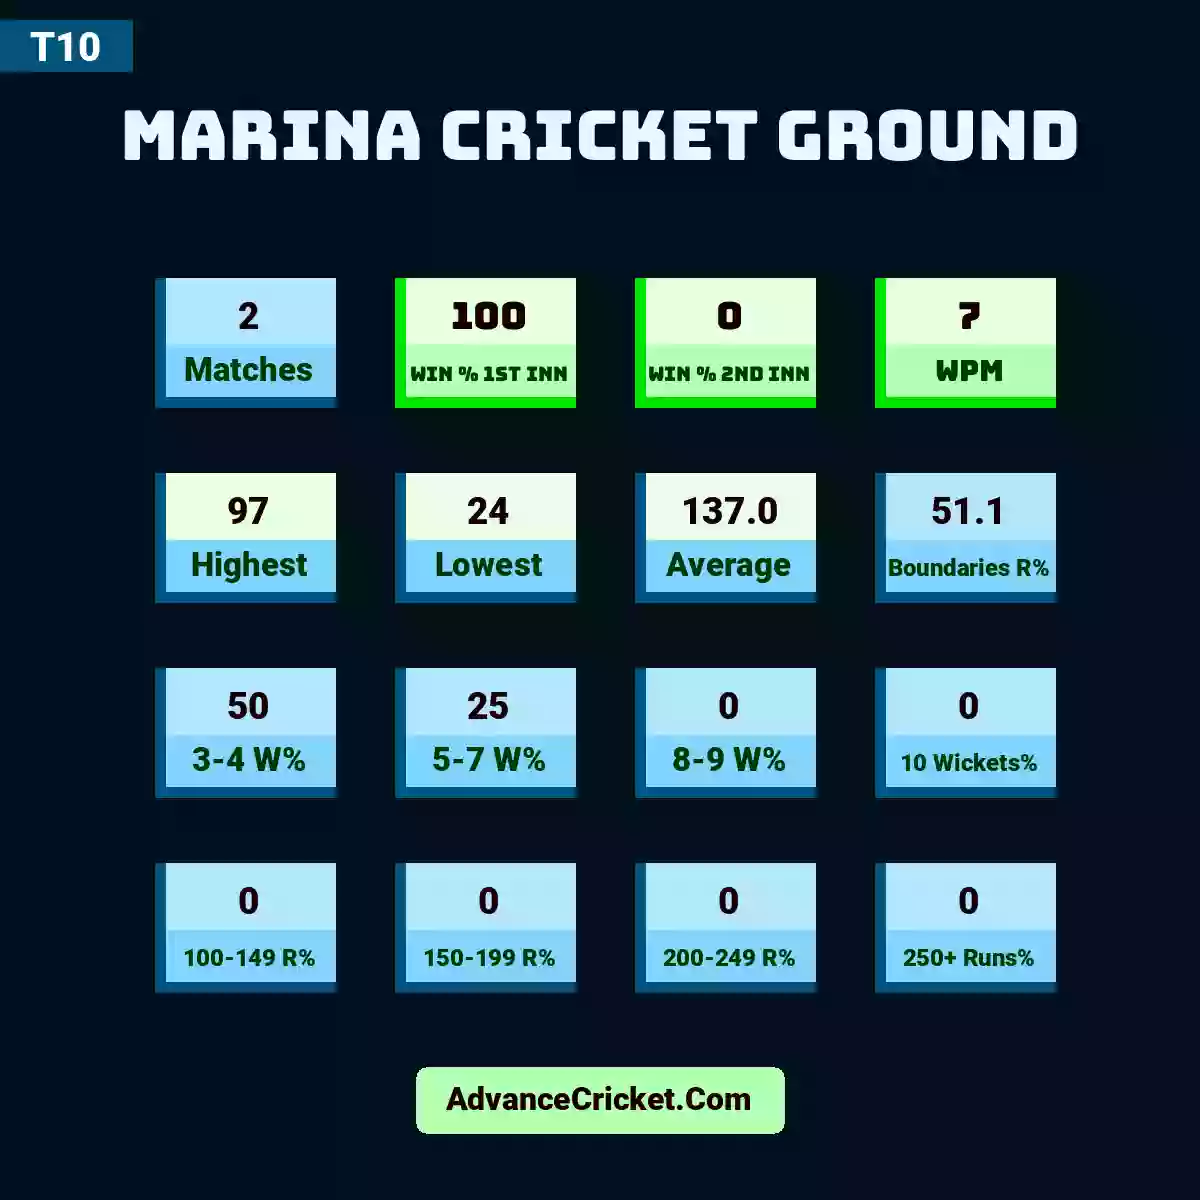 Image showing Marina Cricket Ground with Matches: 2, Win % 1st Inn: 100, Win % 2nd Inn: 0, WPM: 7, Highest: 97, Lowest: 24, Average: 137.0, Boundaries R%: 51.1, 3-4 W%: 50, 5-7 W%: 25, 8-9 W%: 0, 10 Wickets%: 0, 100-149 R%: 0, 150-199 R%: 0, 200-249 R%: 0, 250+ Runs%: 0.